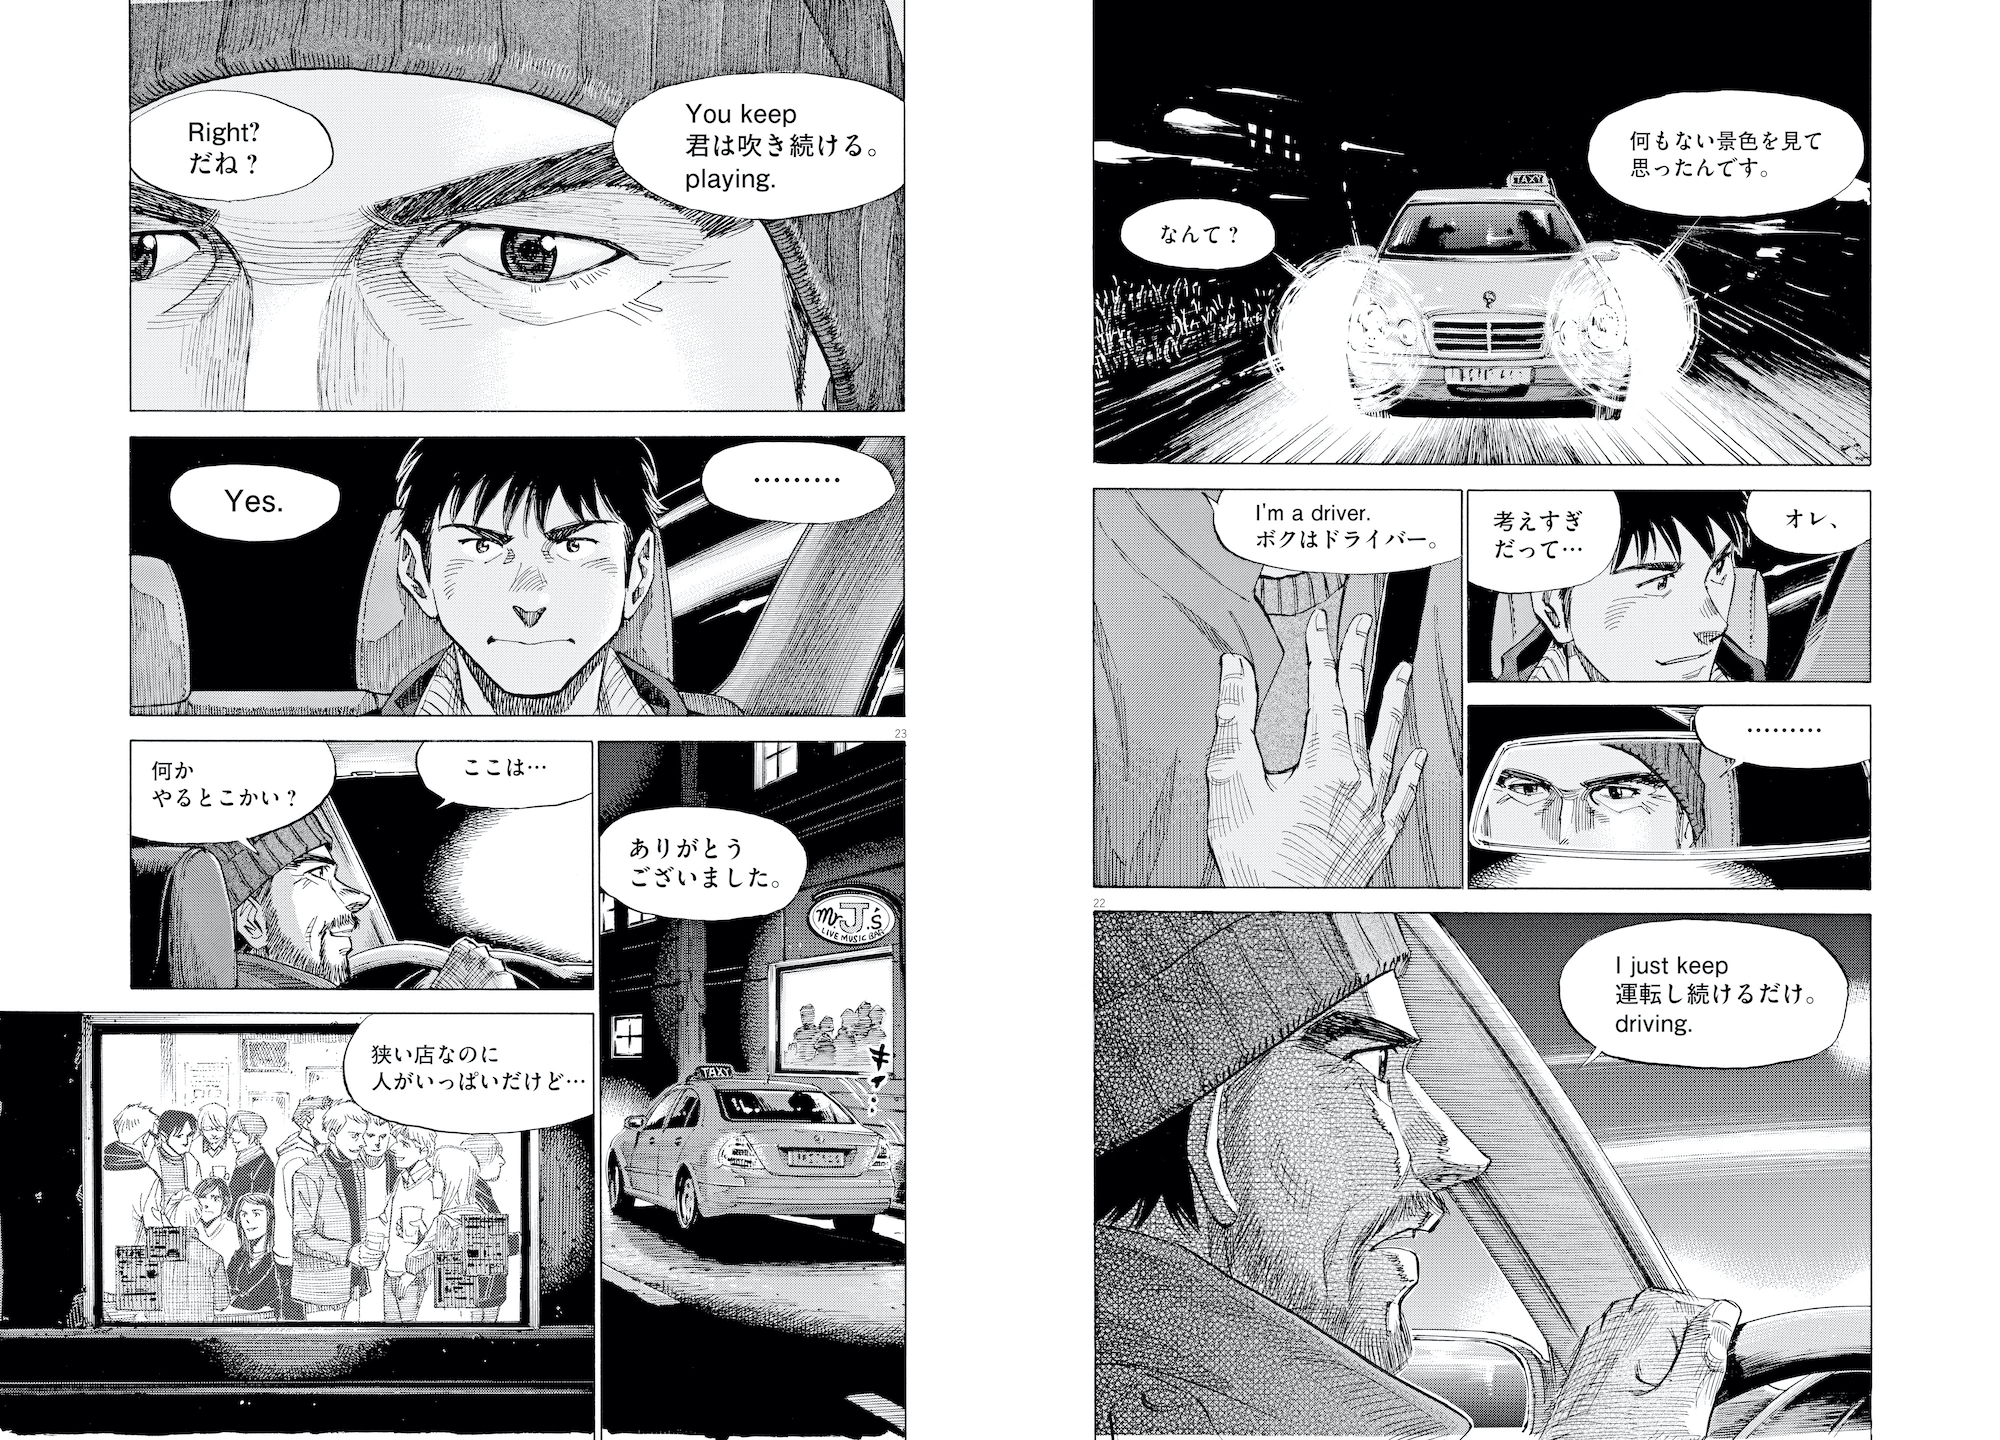 The Mangaka Who Wrote BLUE GIANT, Shinichi Ishizuka Speaks About